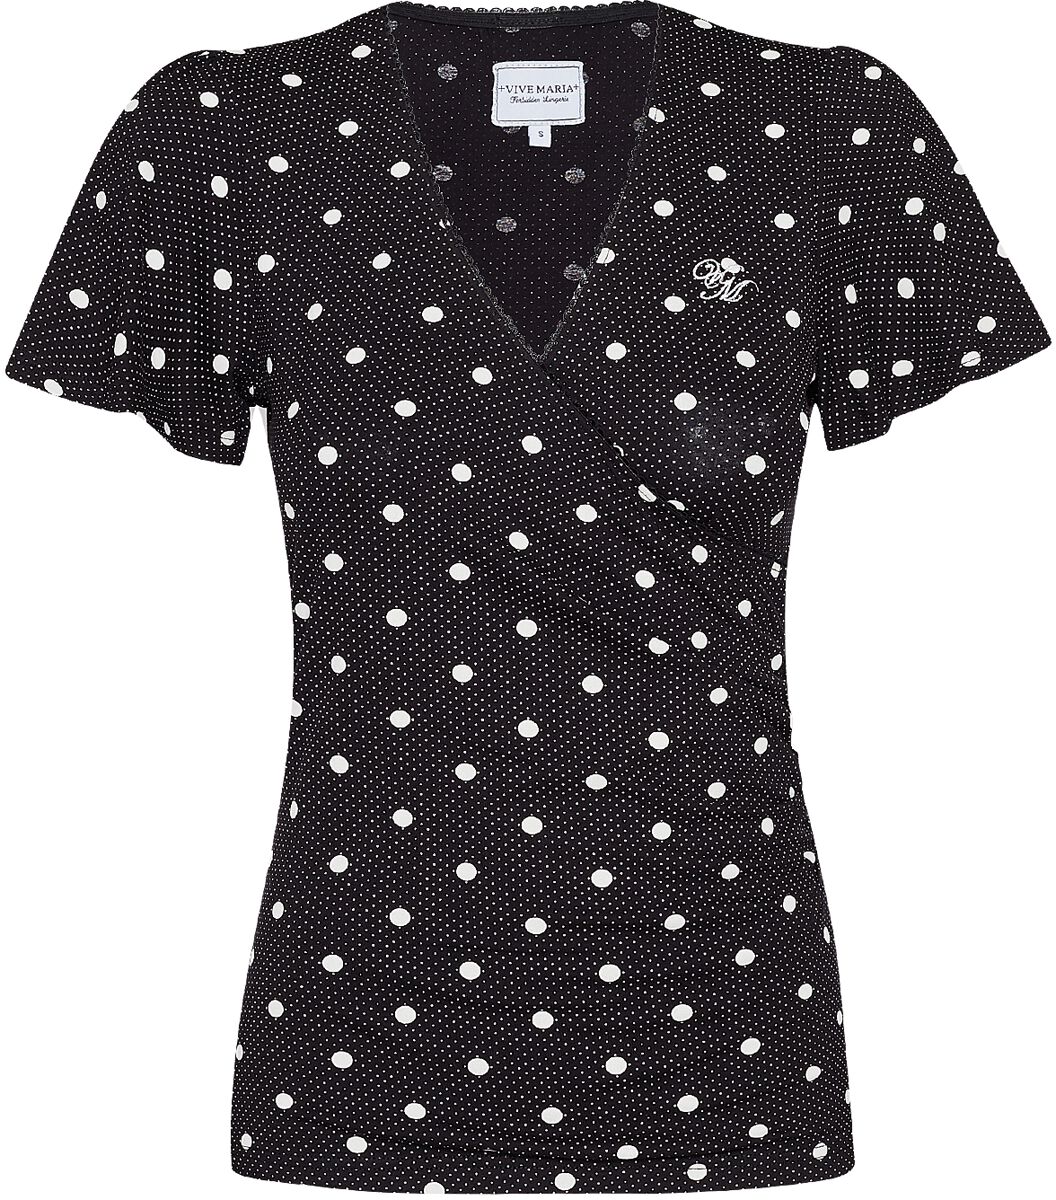 Image of T-Shirt Rockabilly di Vive Maria - Maria shirt - XS a L - Donna - nero/bianco